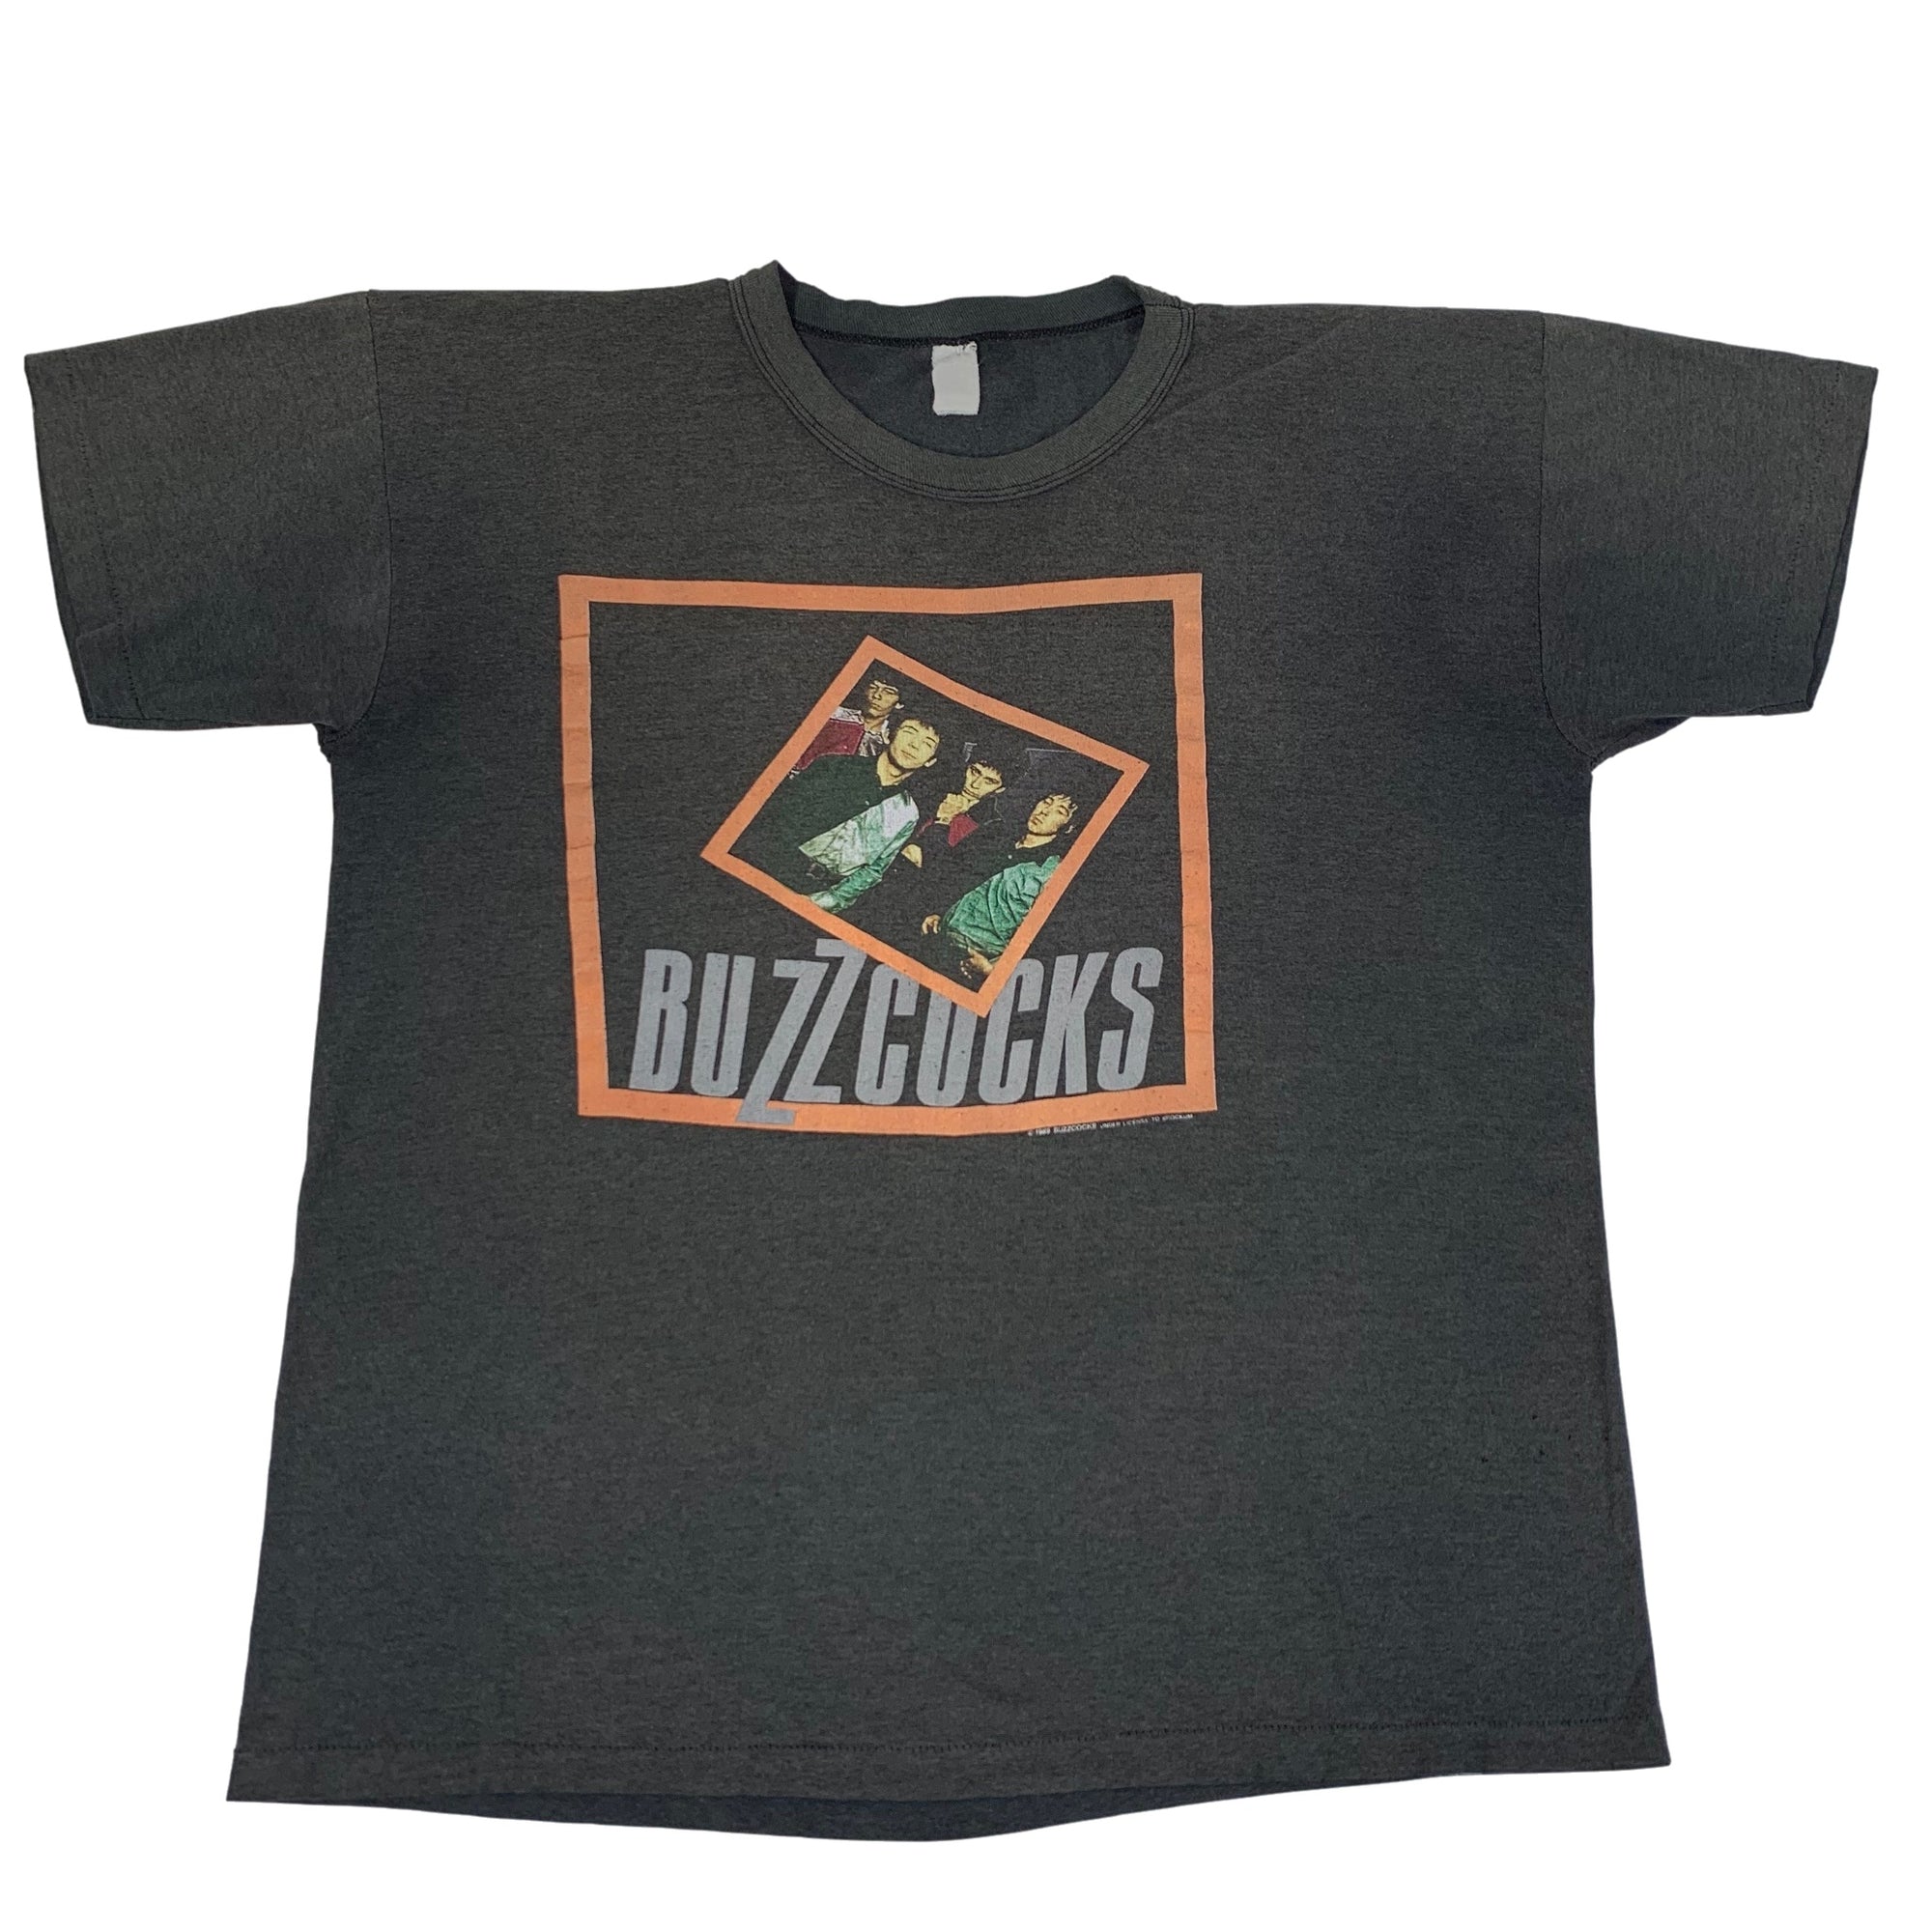 Vintage Buzzcocks "Telling Friends" 1989 Tour T-Shirt - jointcustodydc